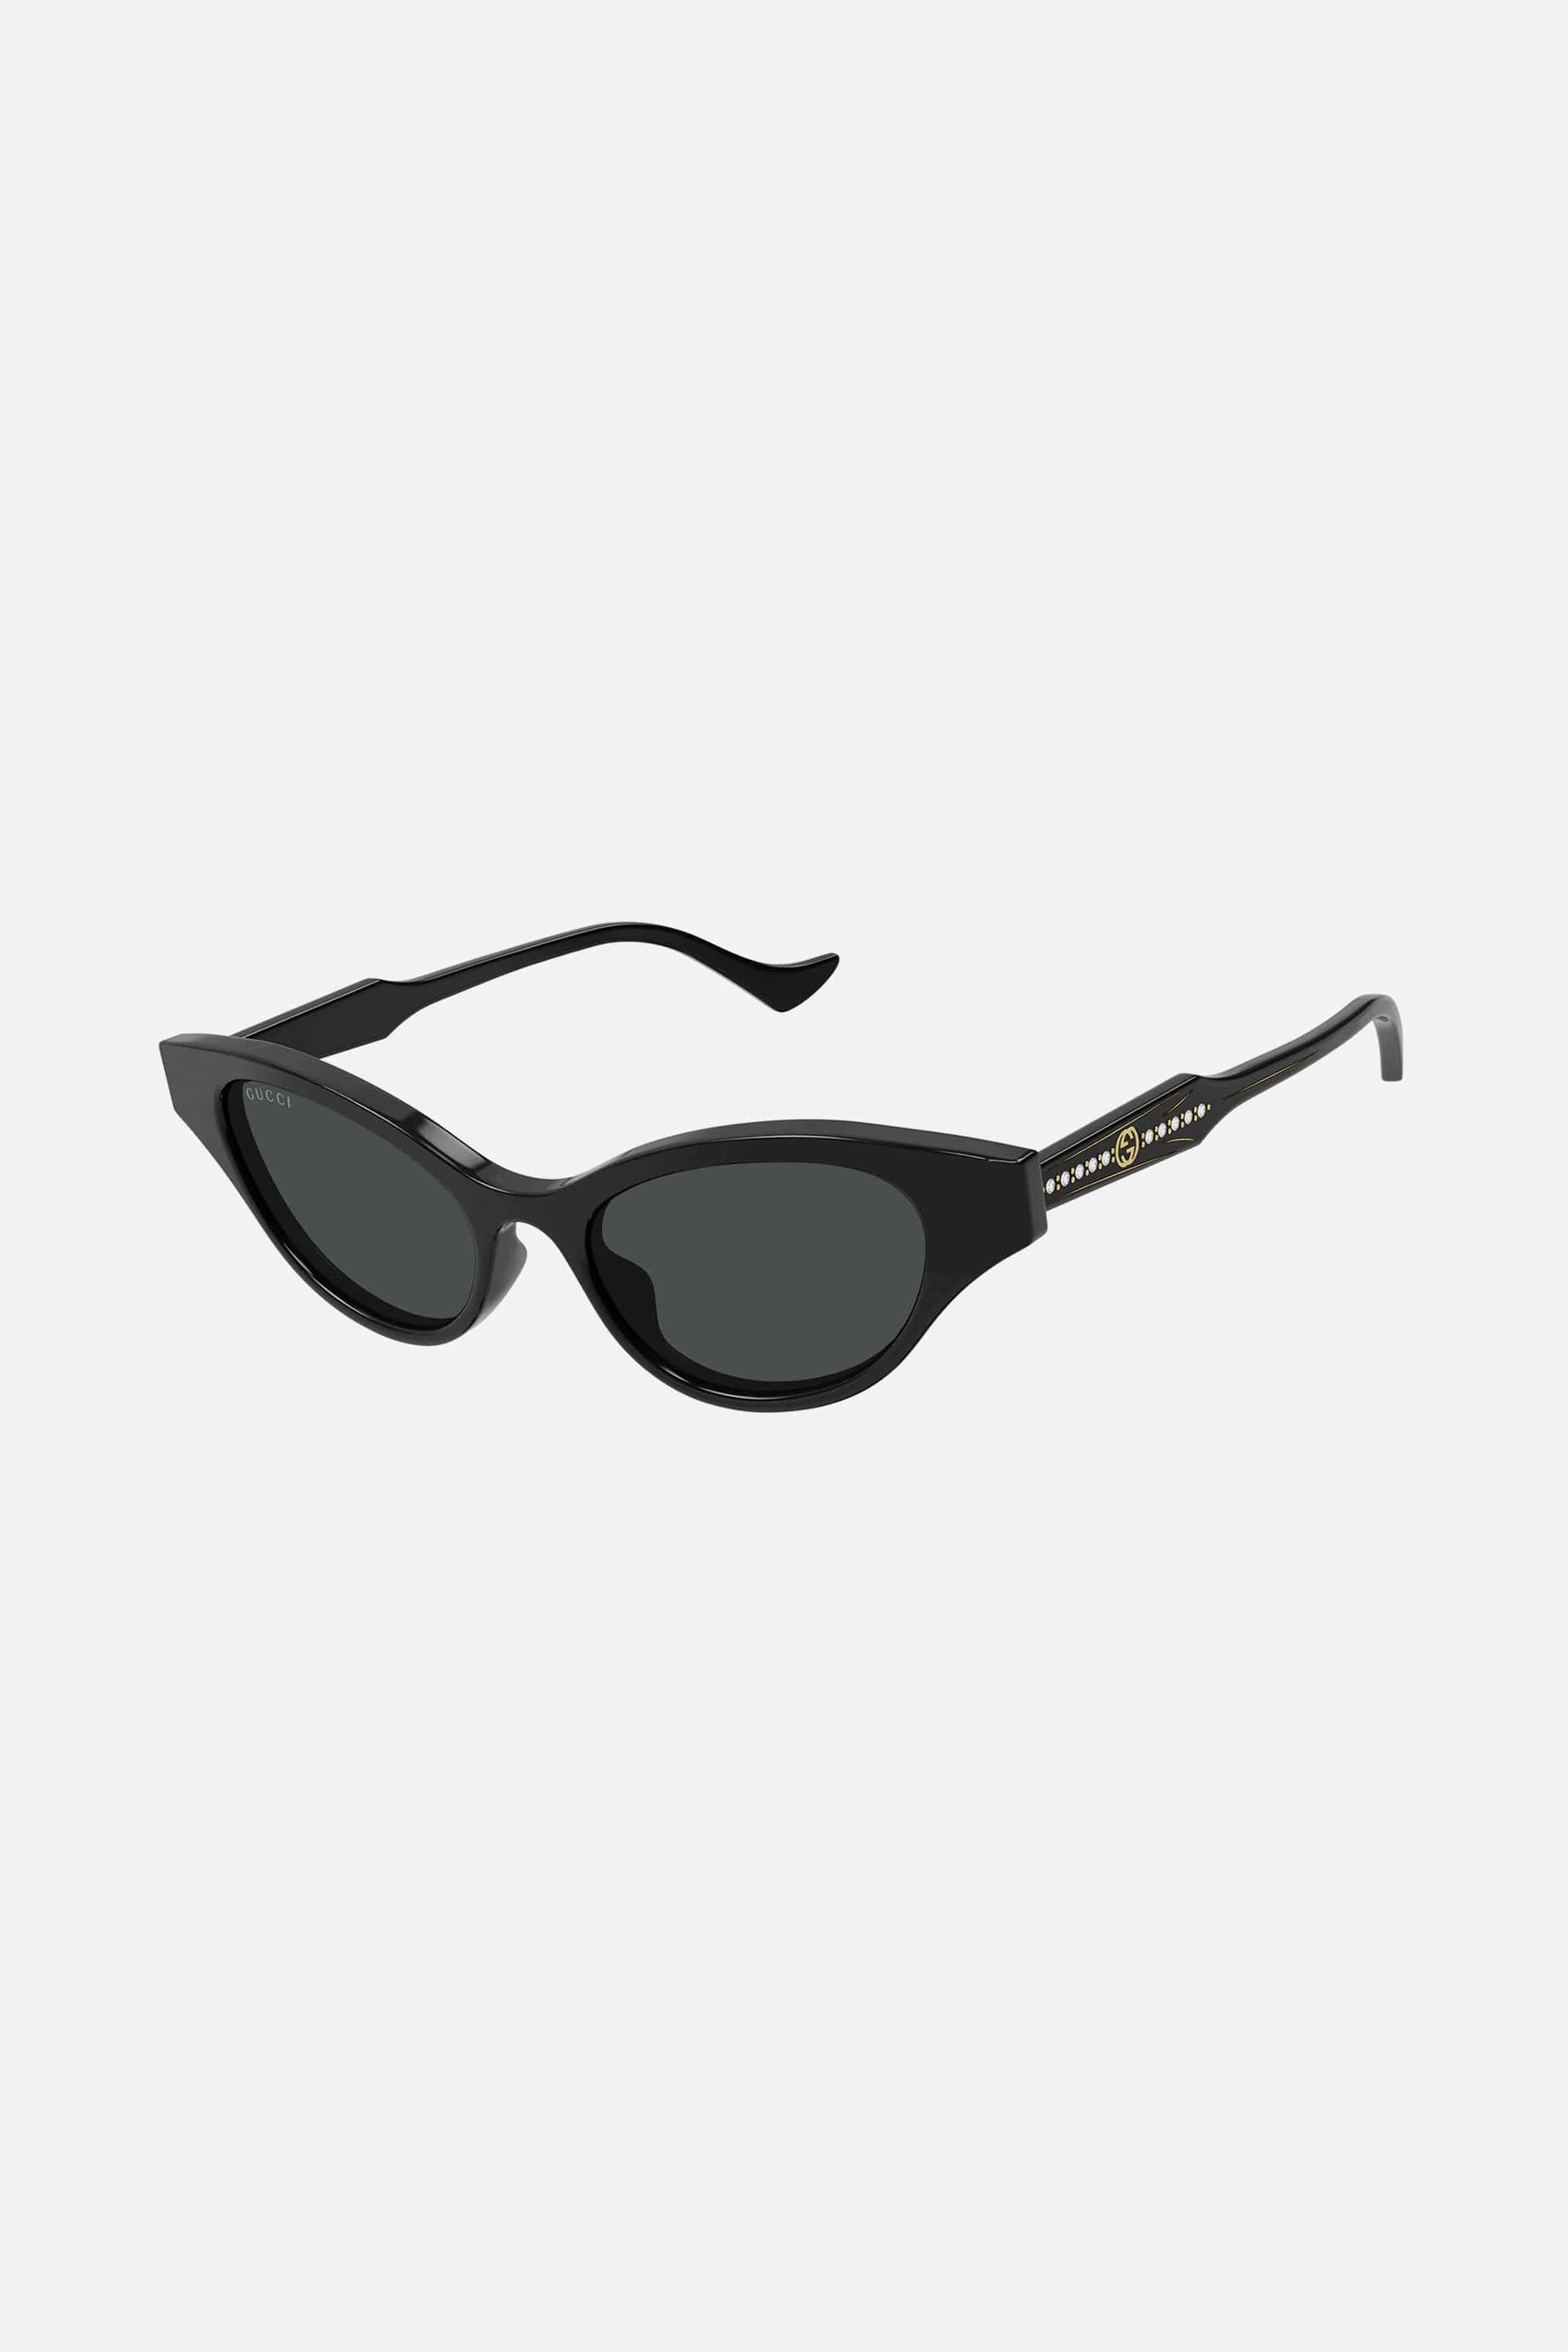 Gucci cat eye extreme black sunglasses - Eyewear Club